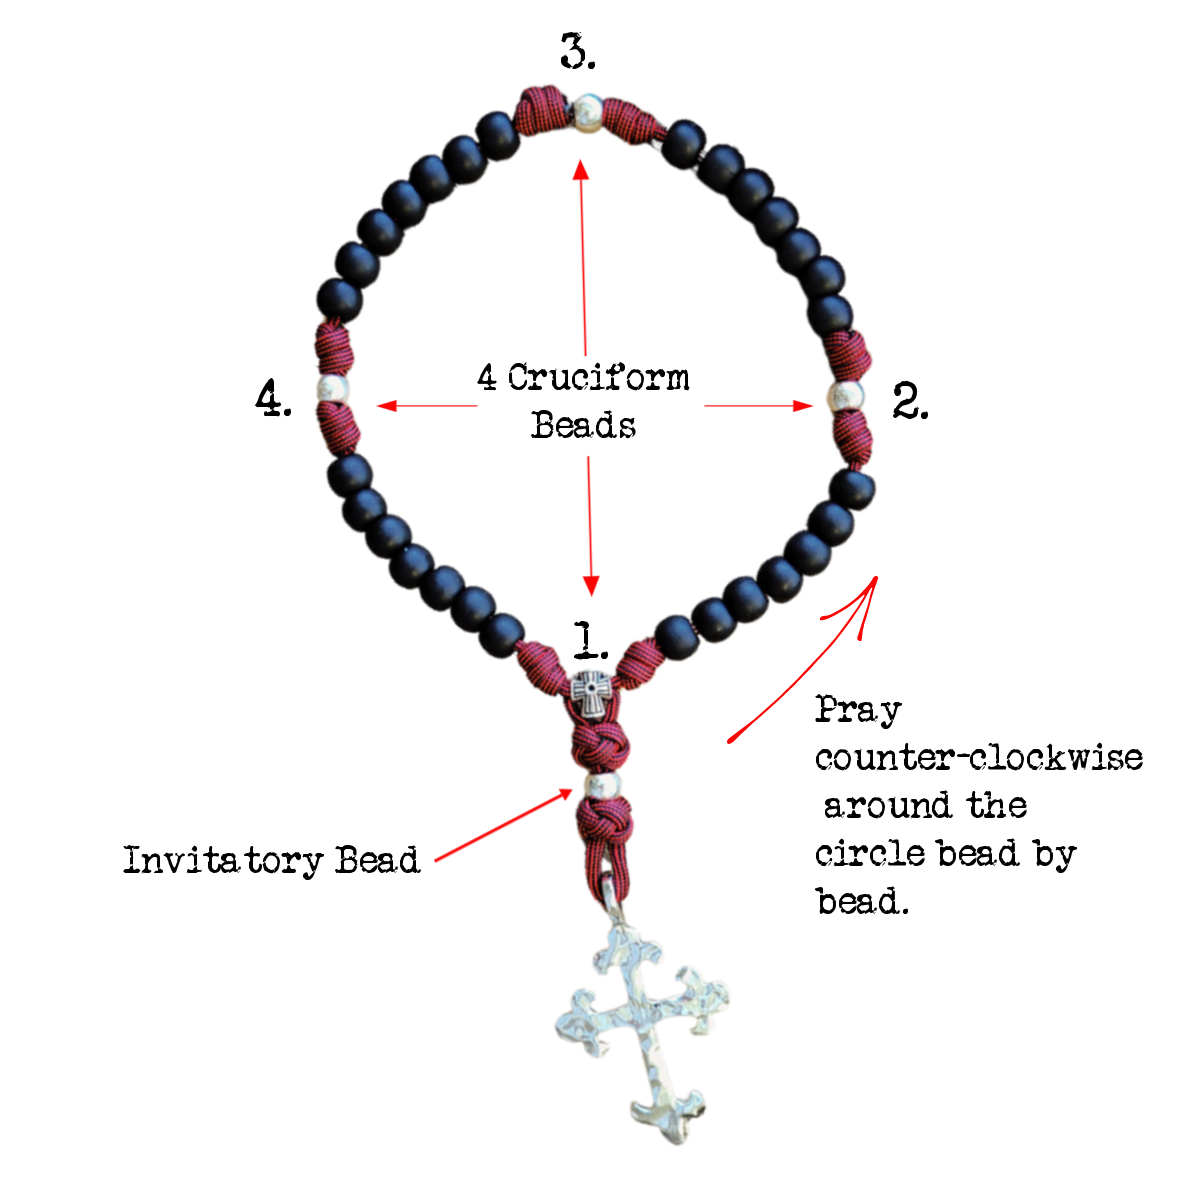 Anglican or Jesus Beads and Prayers